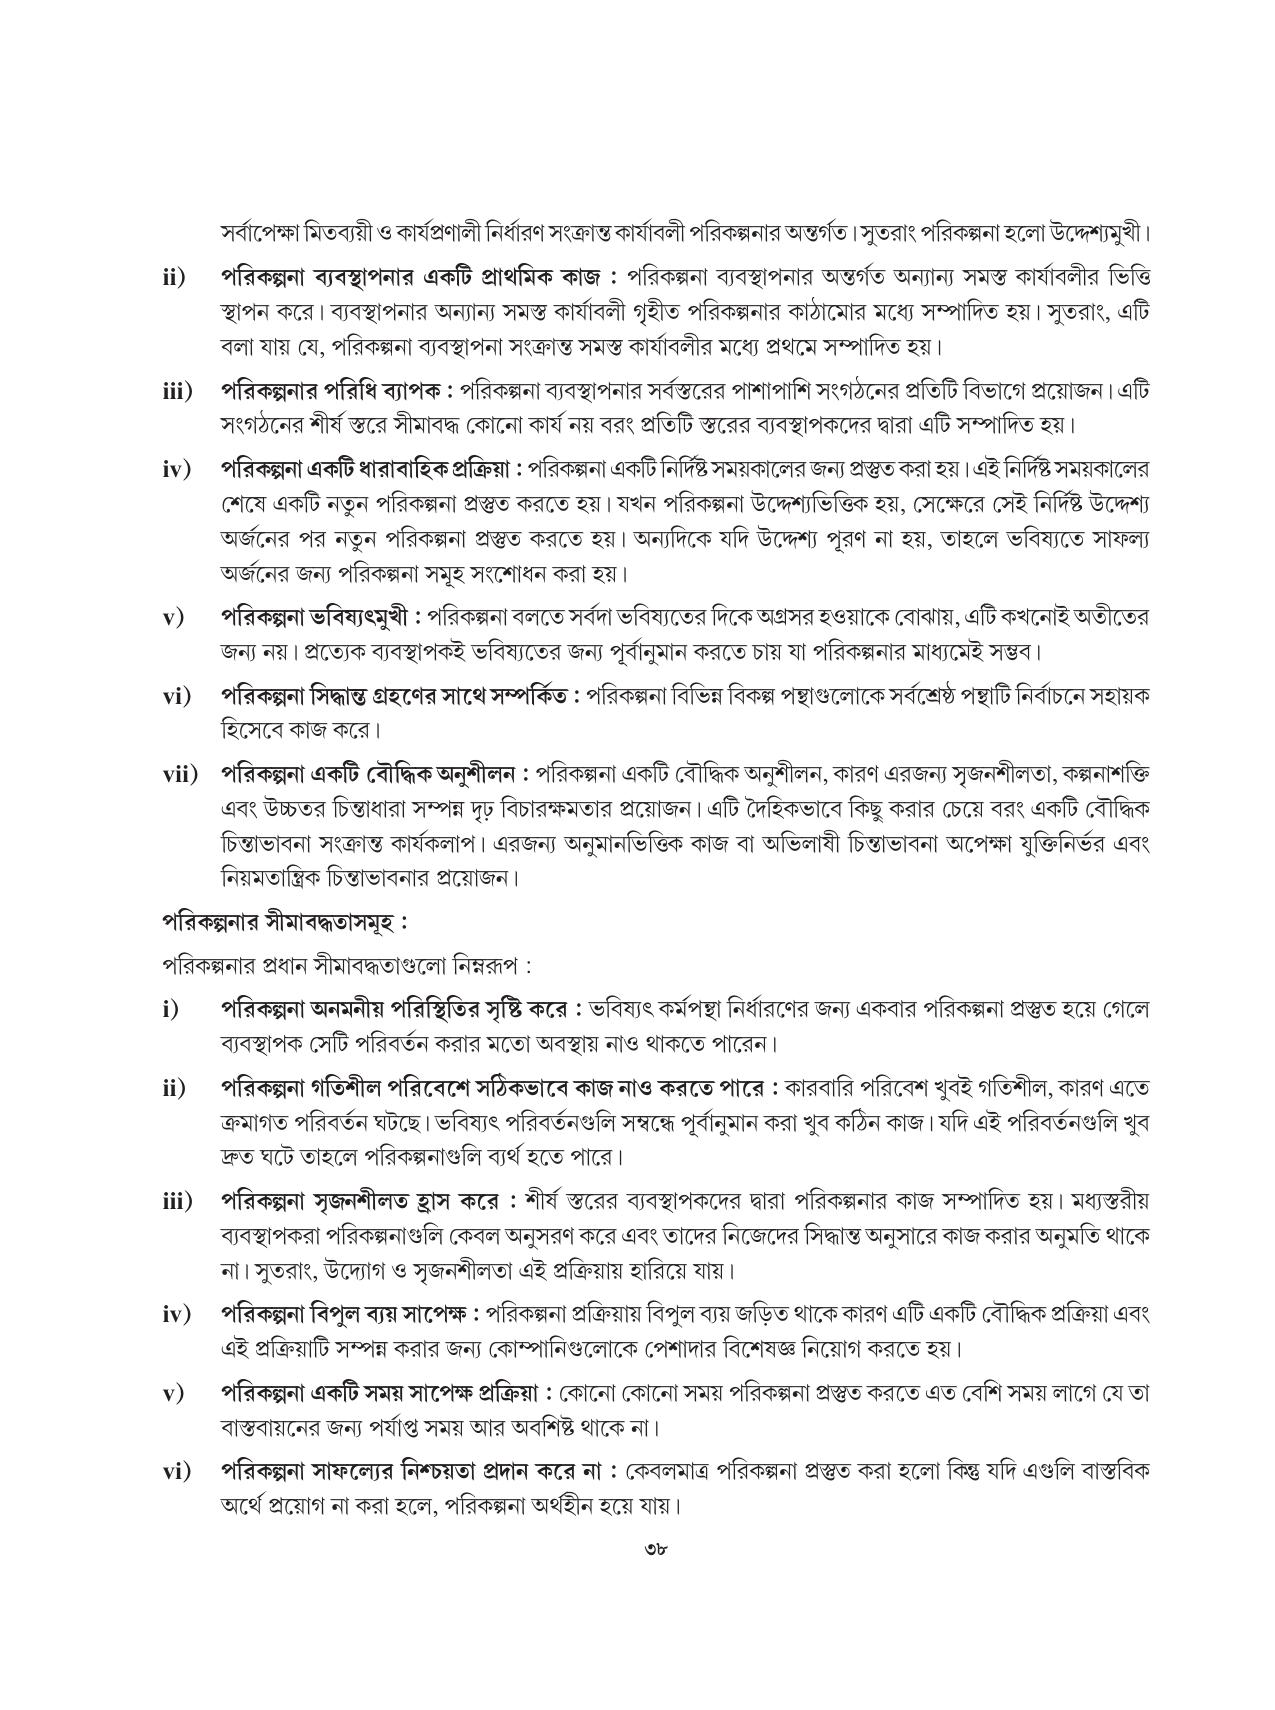 Tripura Board Class 12 Karbari Shastra Bengali Version Workbooks - Page 38